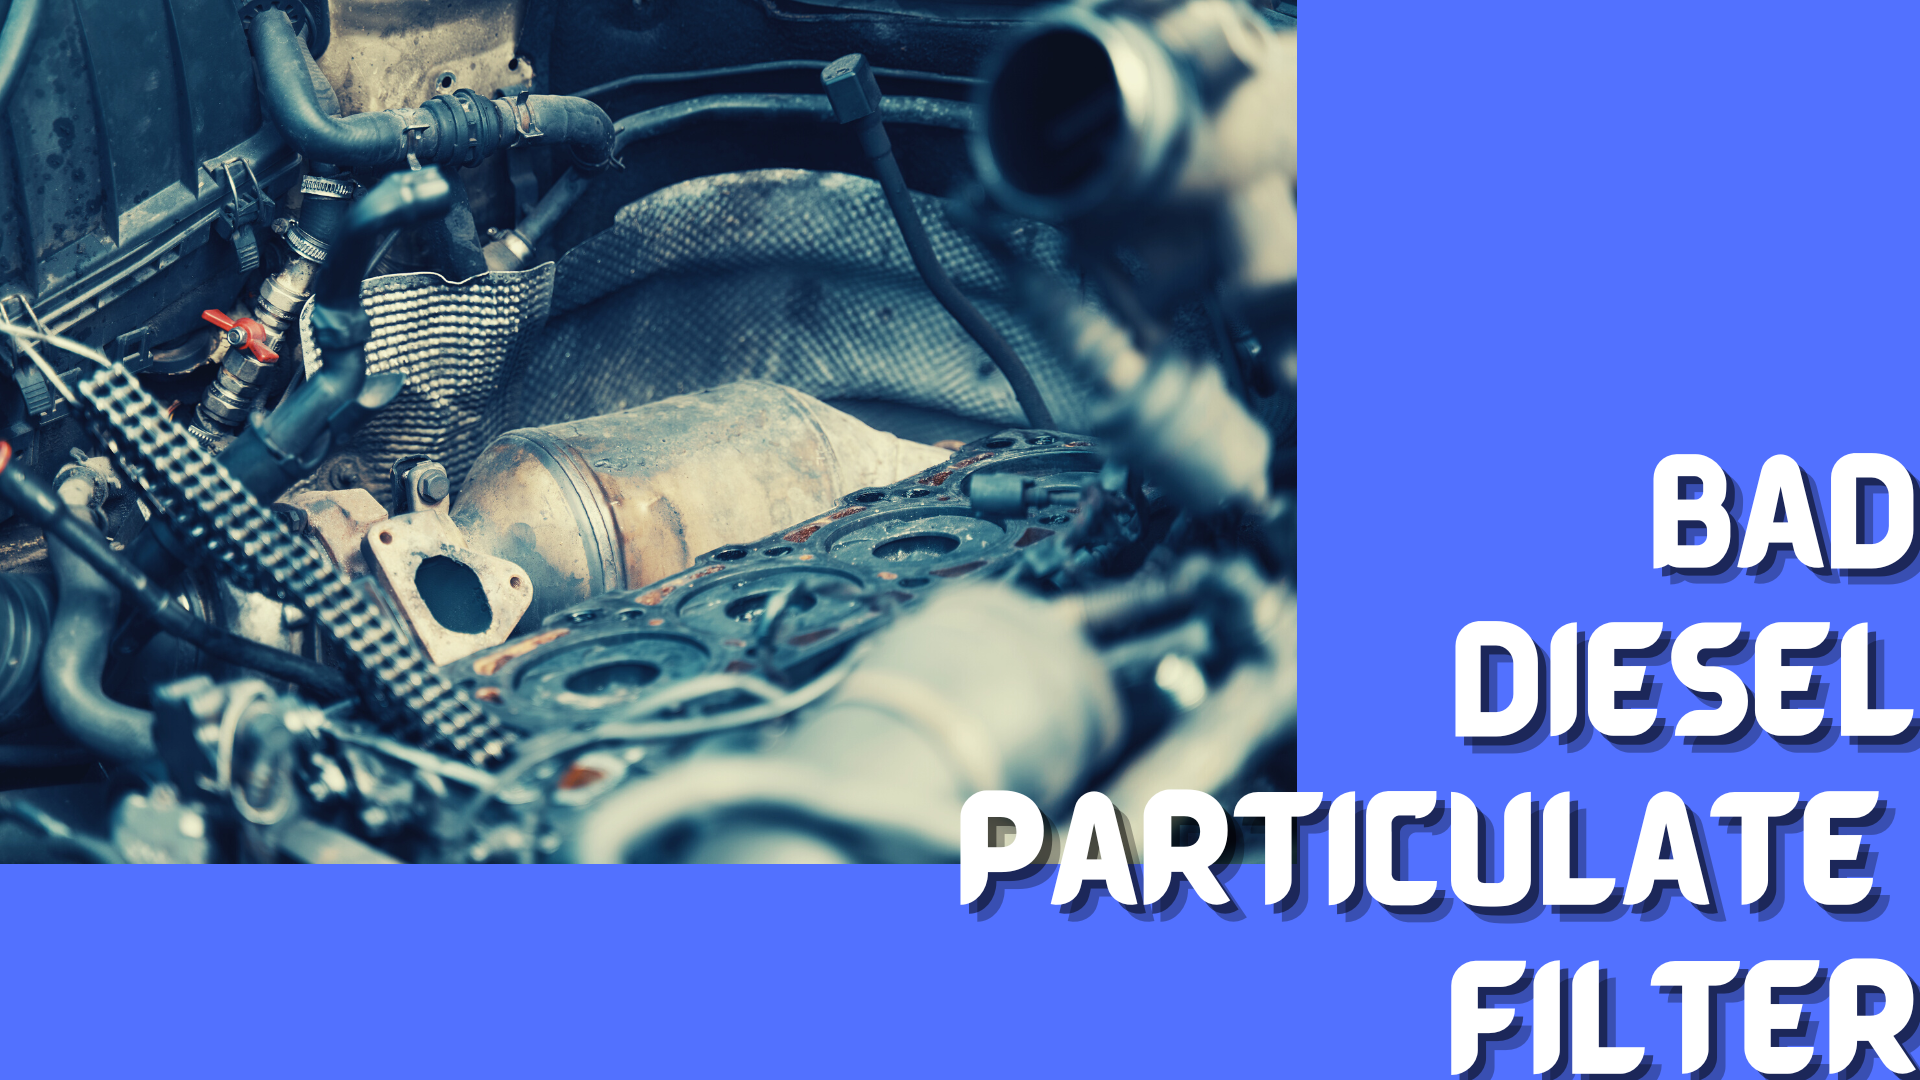 Symptoms of A Bad Diesel Particulate Filter In Trucks